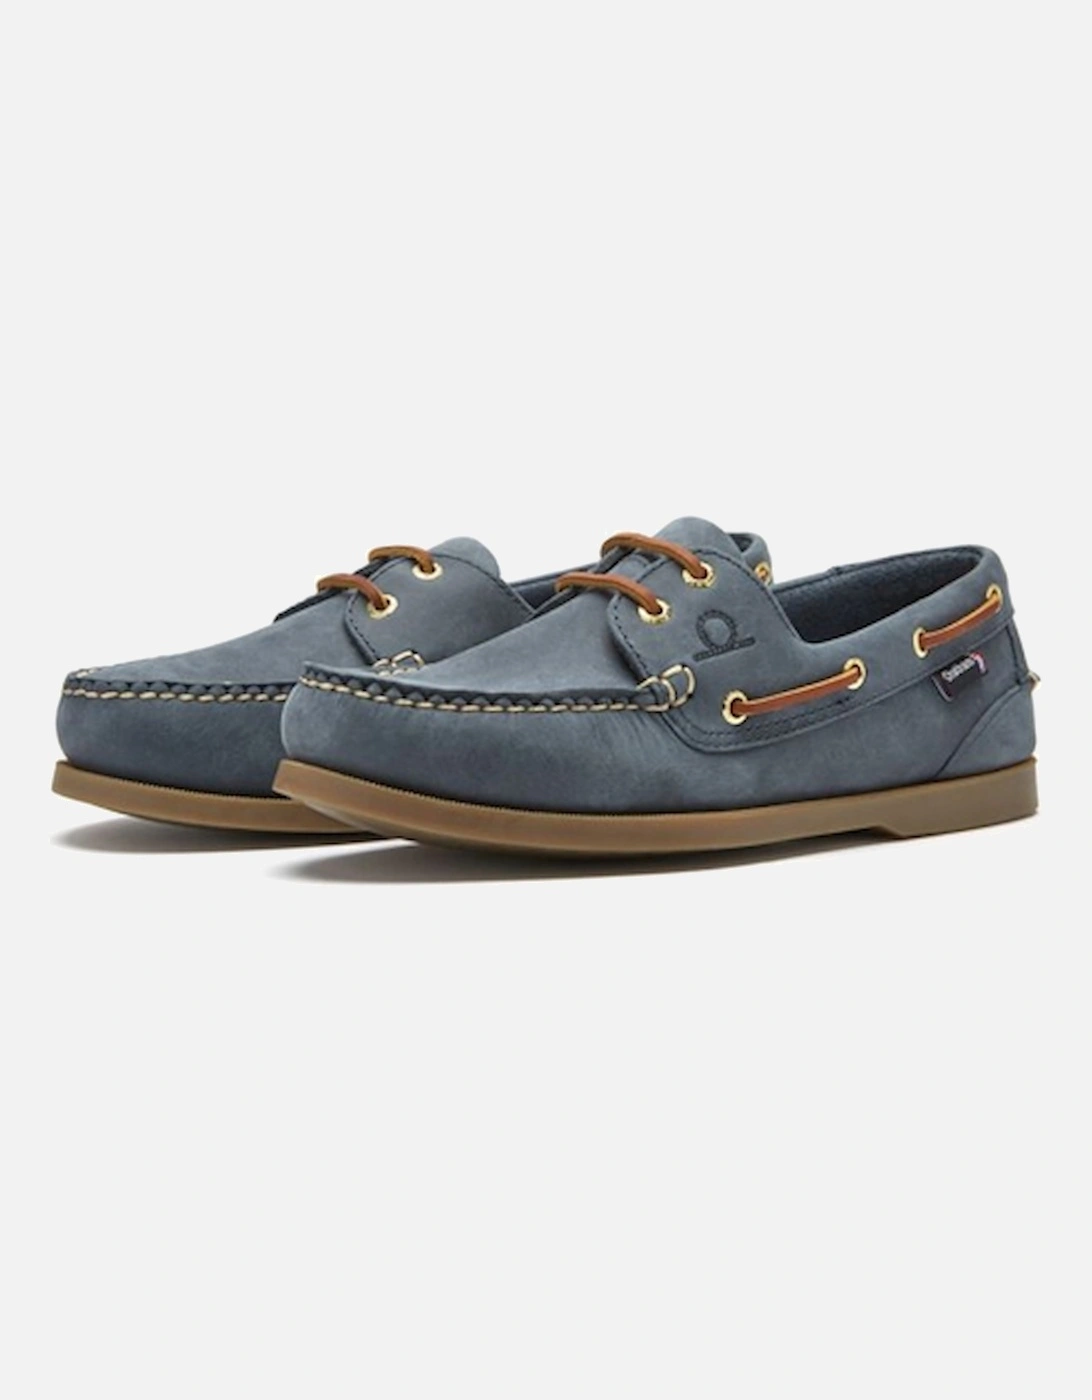 Men's Deck II G2 Premium Leather Boat Shoe Blue